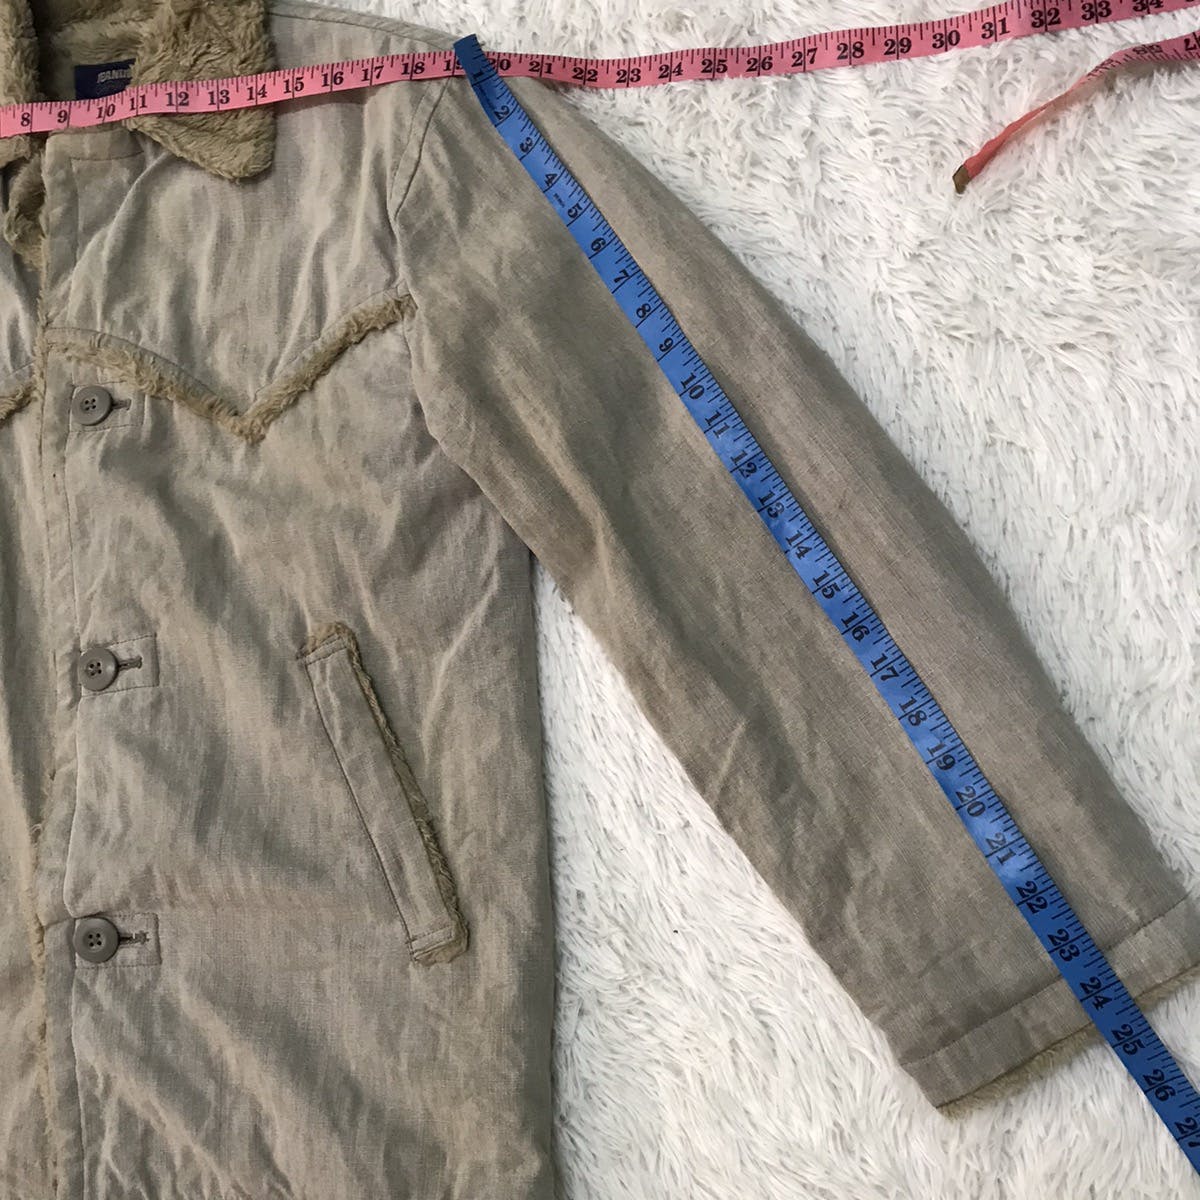 Japanese Brand - Jeaning Garage jacket sherpa inside - 5